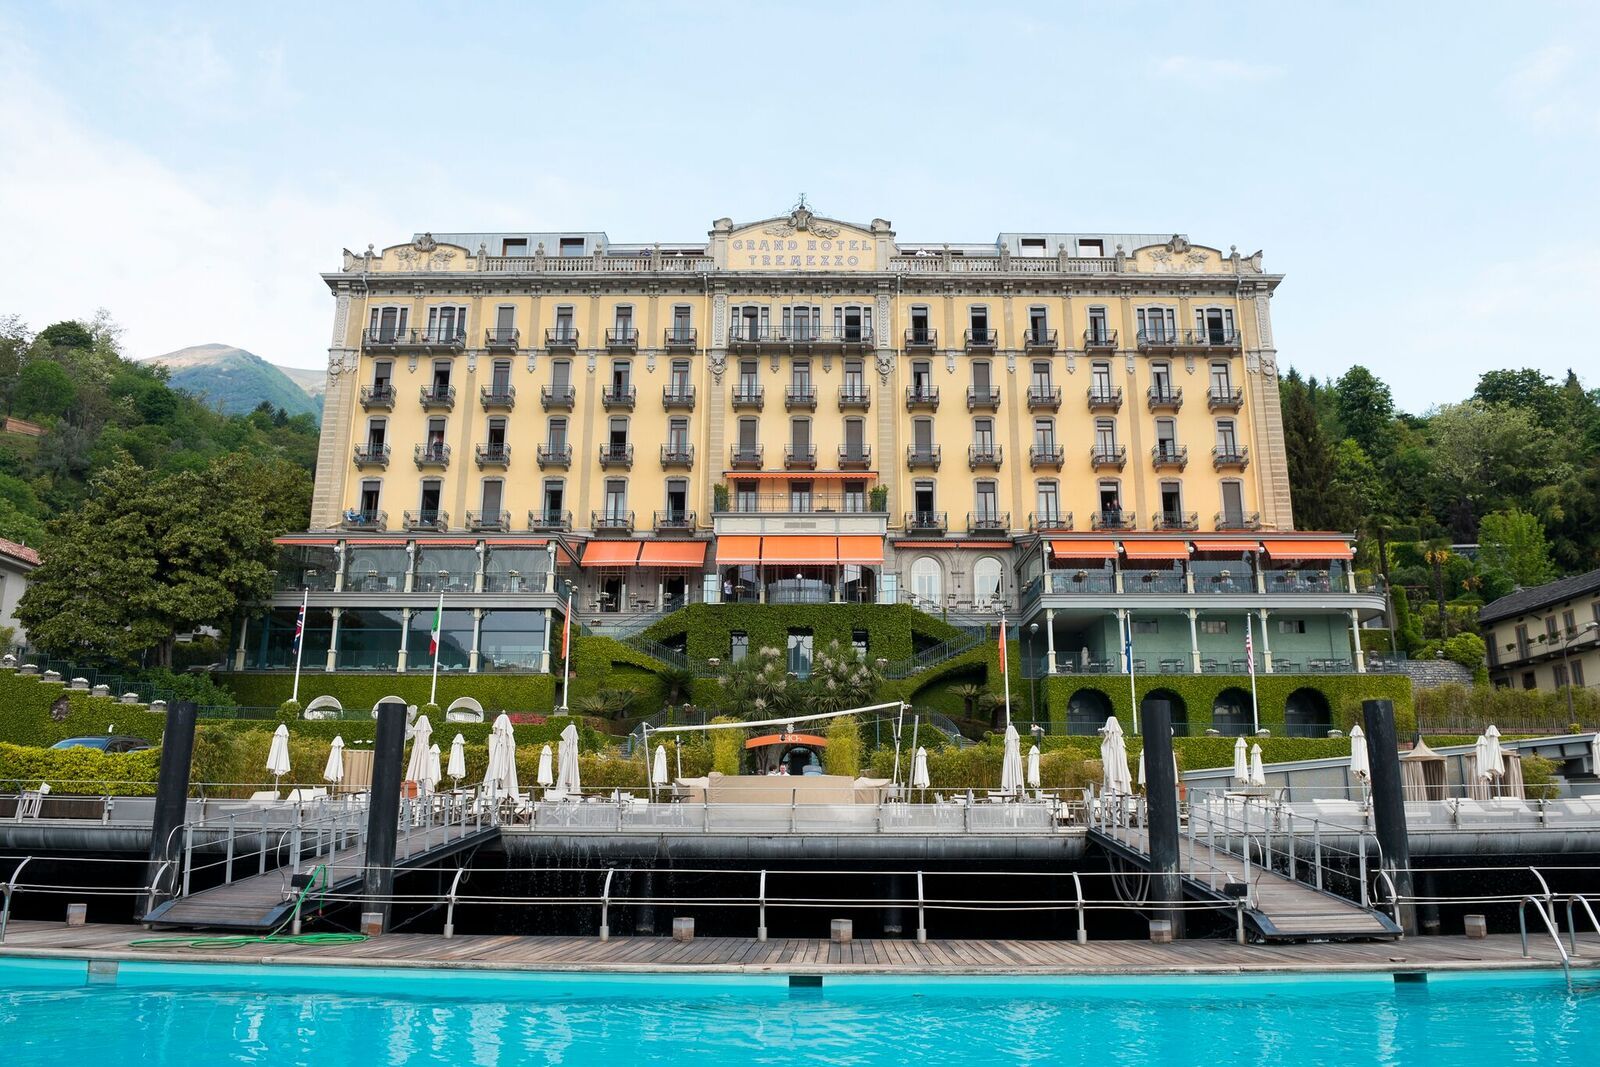 Grand Hotel Tremezzo on Lake Como Is Definitely Worth the Visit